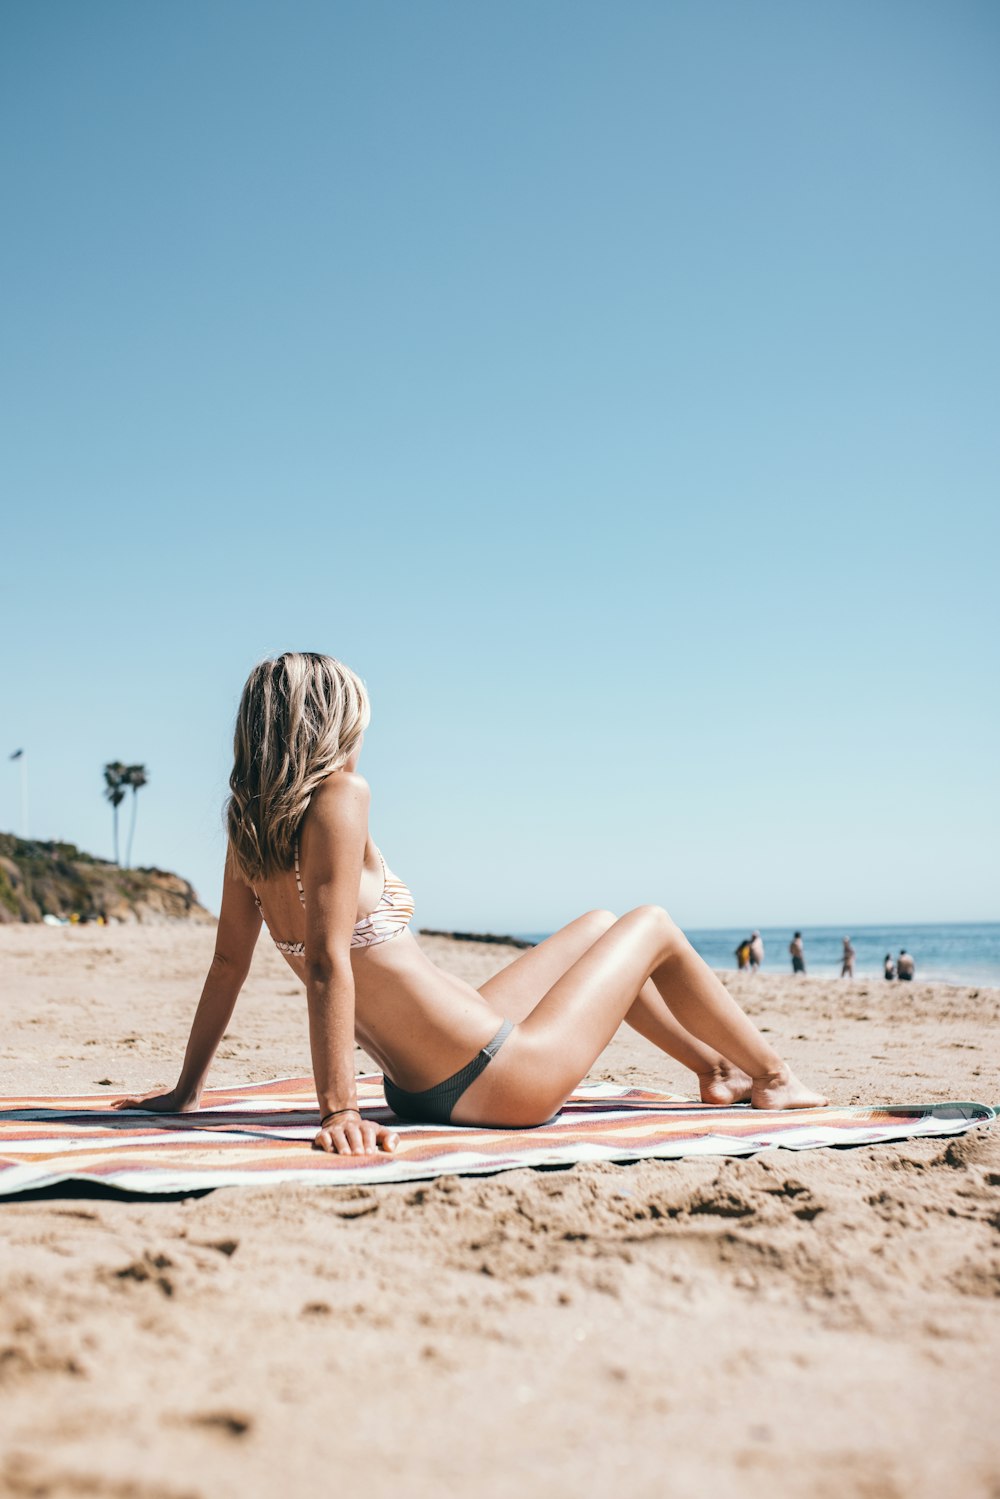 Woman in black bikini lying on beach sand during daytime photo â€“ Free Laguna  beach Image on Unsplash